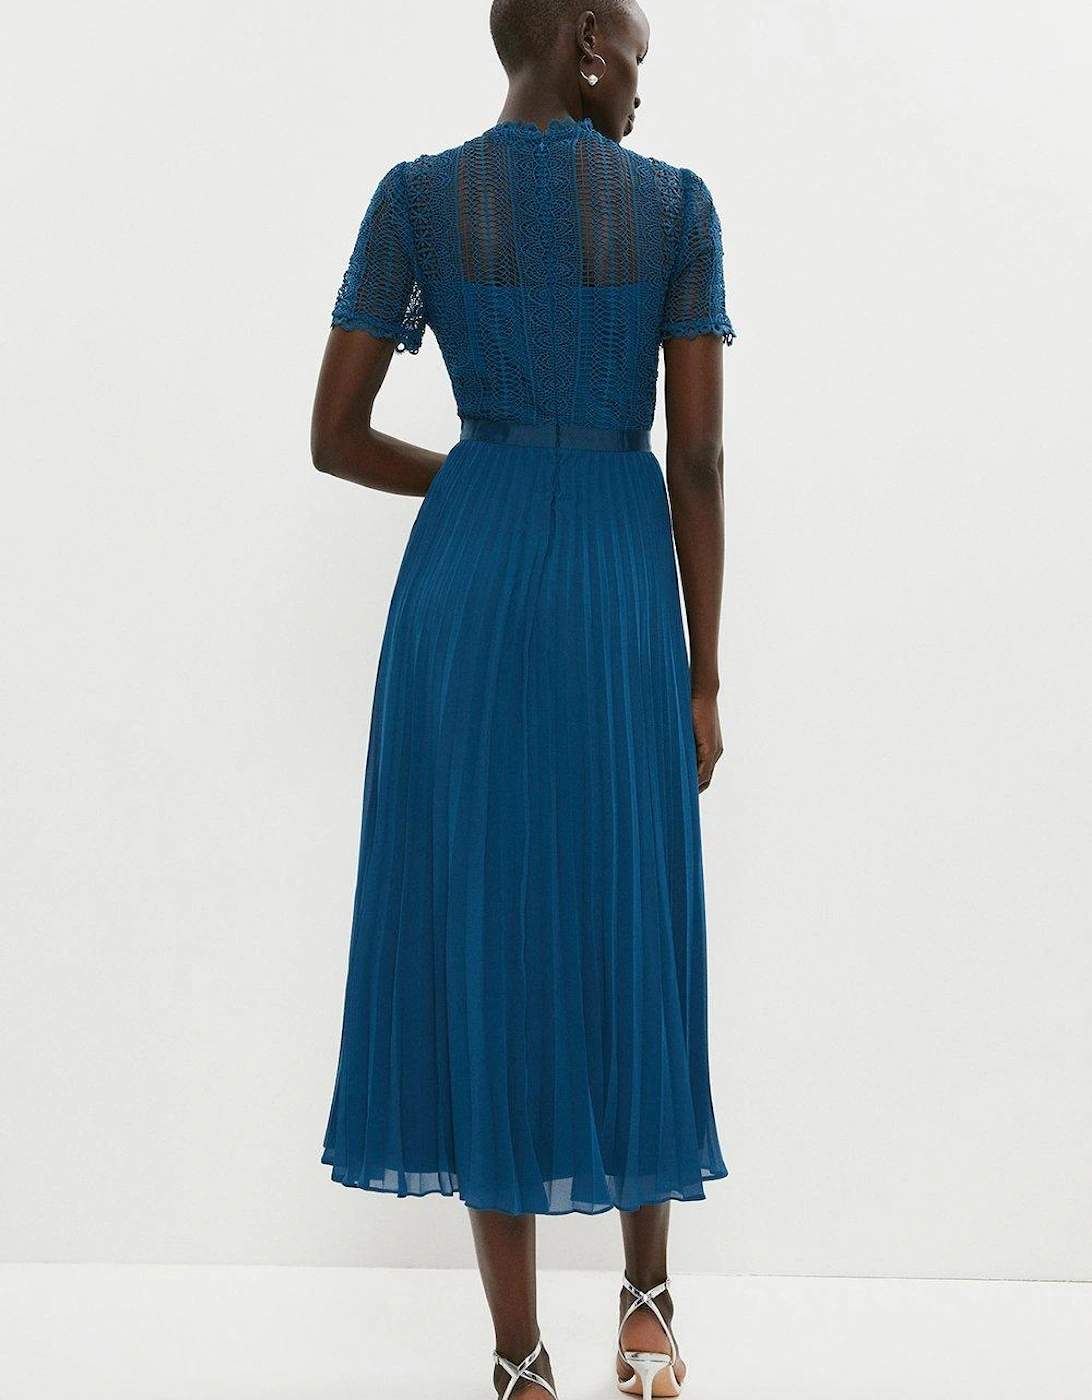 Vertical Lace Bodice Pleat Skirt Dress